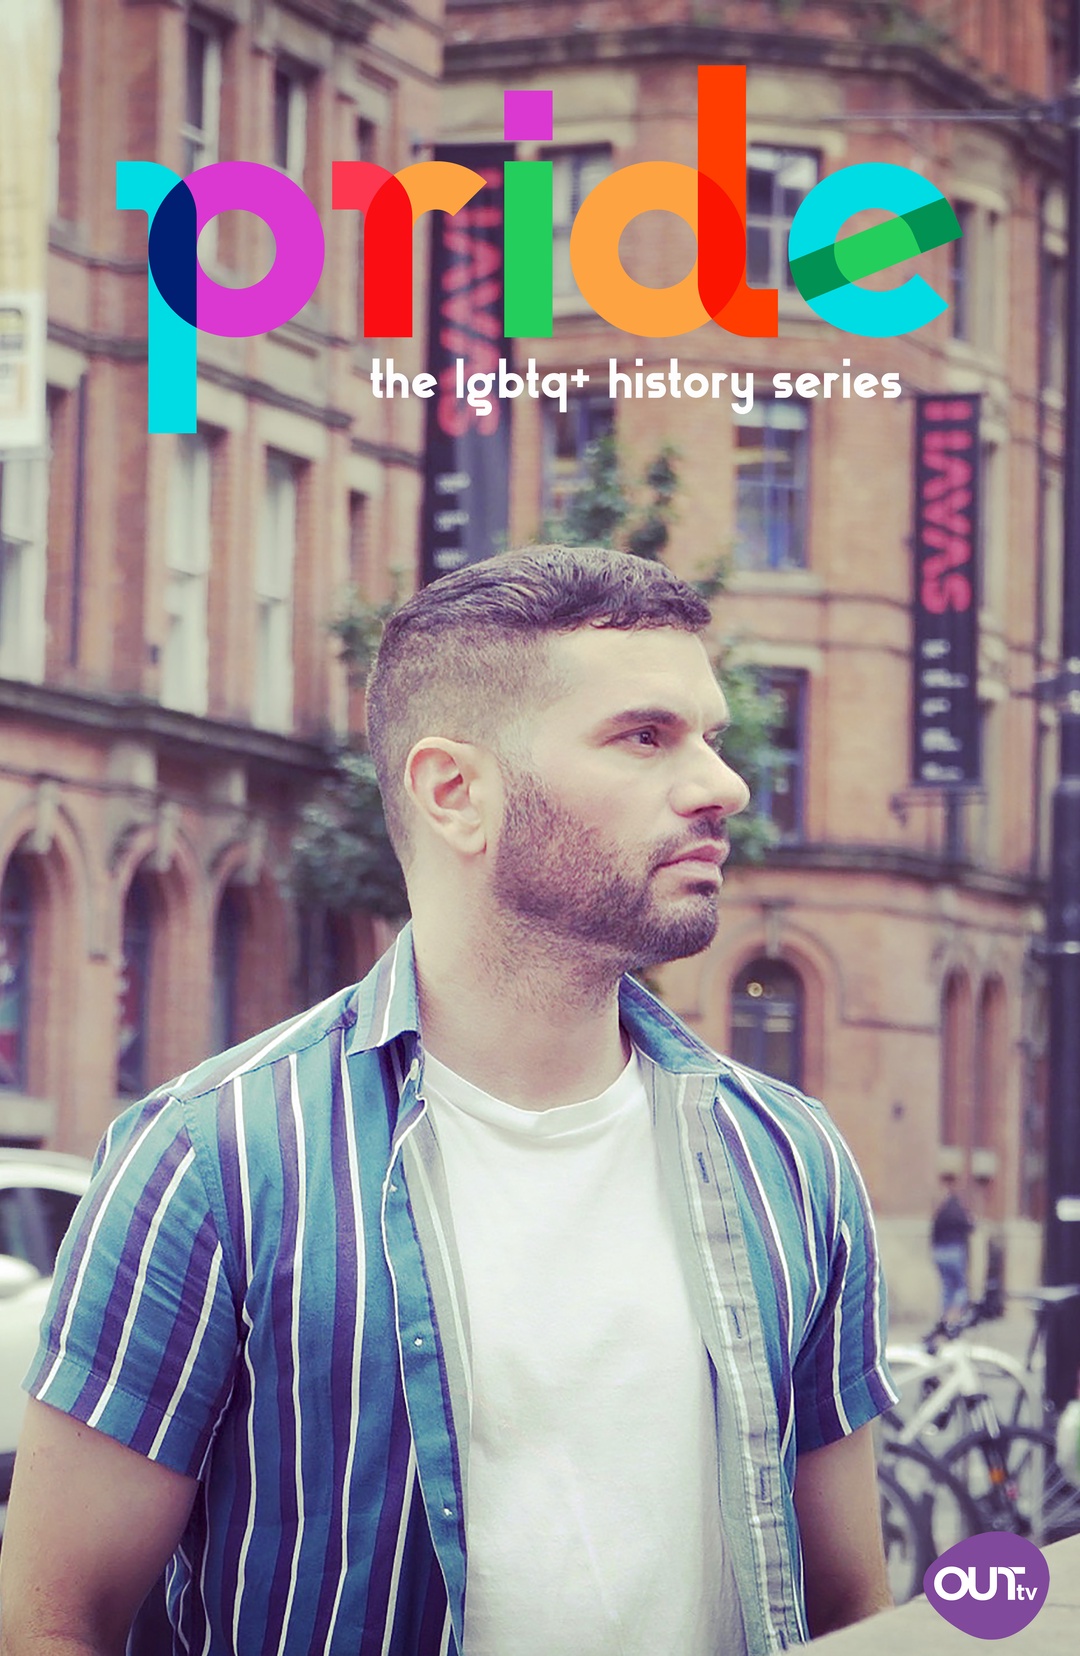 Pride: The LGBTQ+ History Series